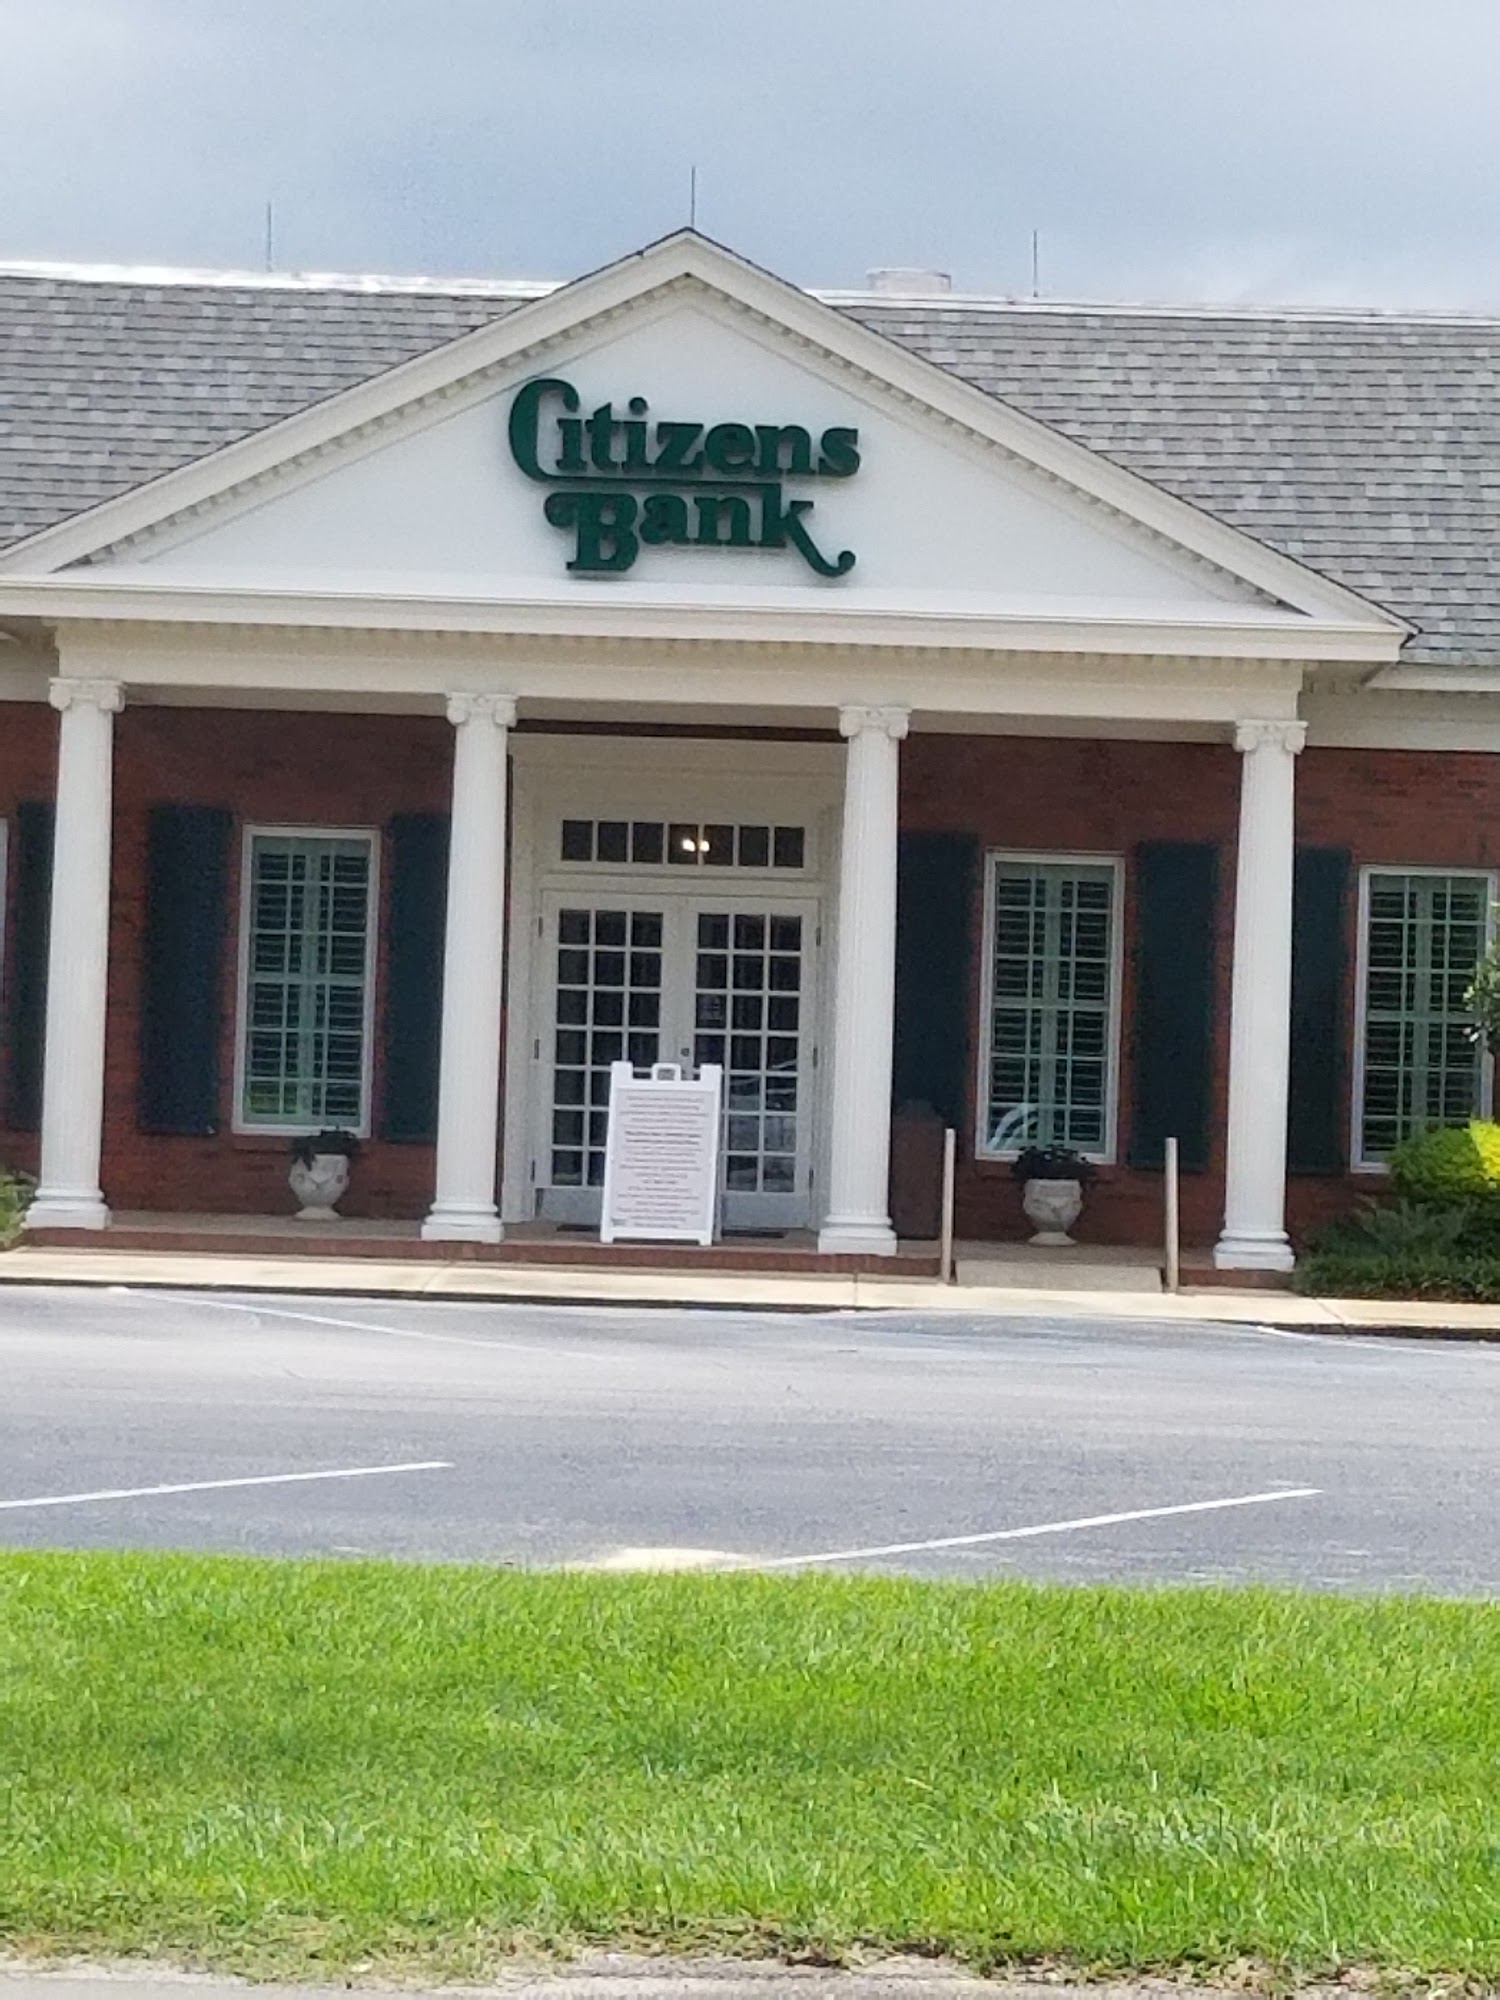 Citizens Bank Inc